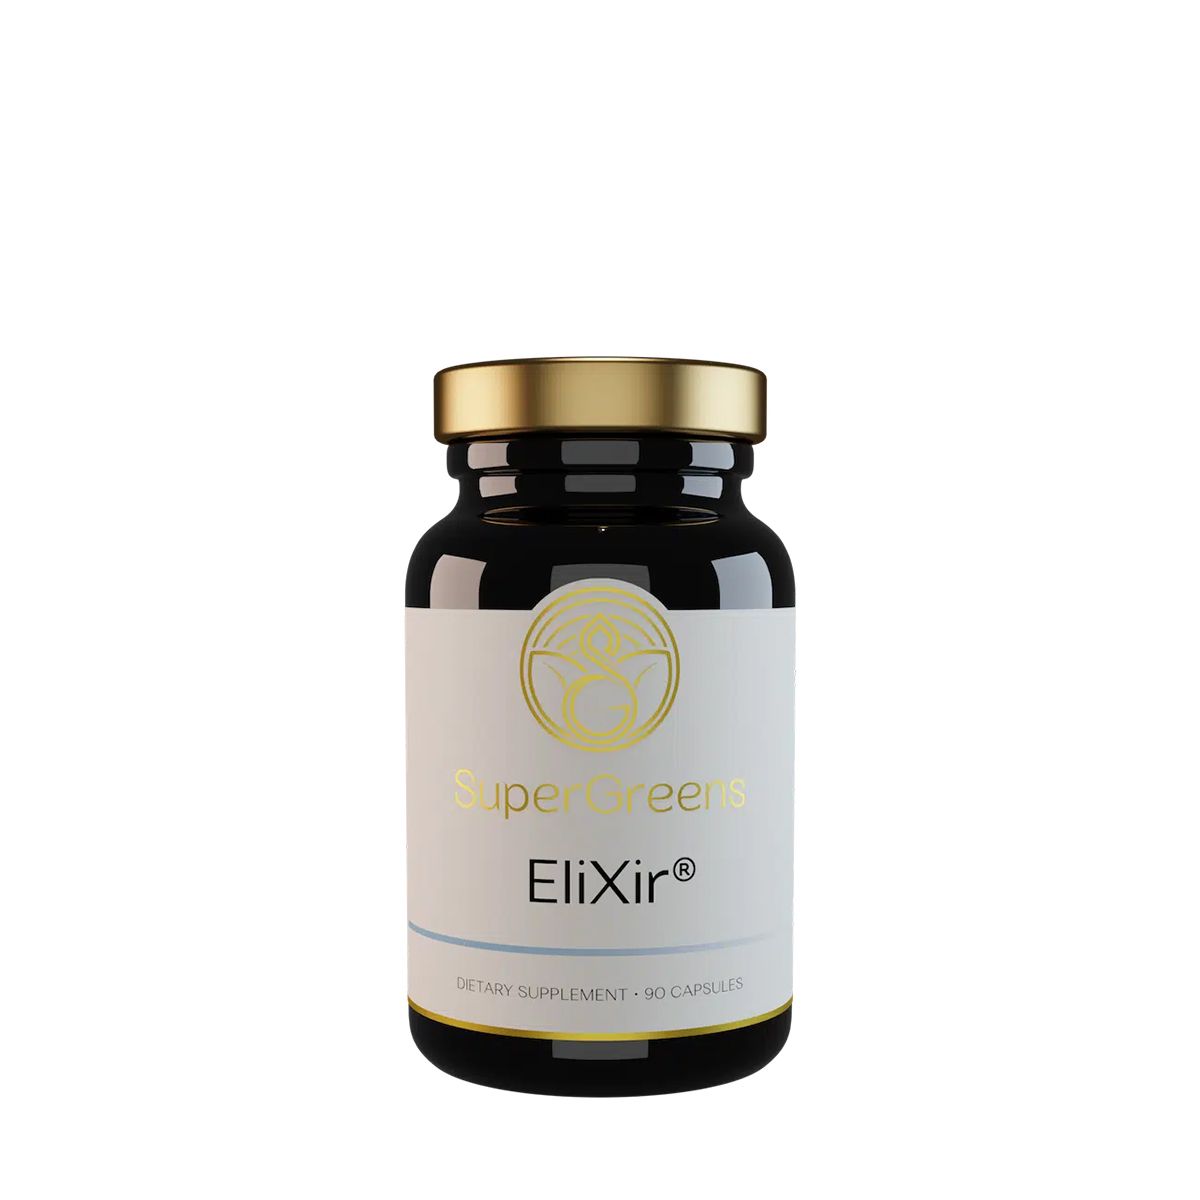 EliXir Serratiopeptidase enzim, SuperGreens, 90 kapszula